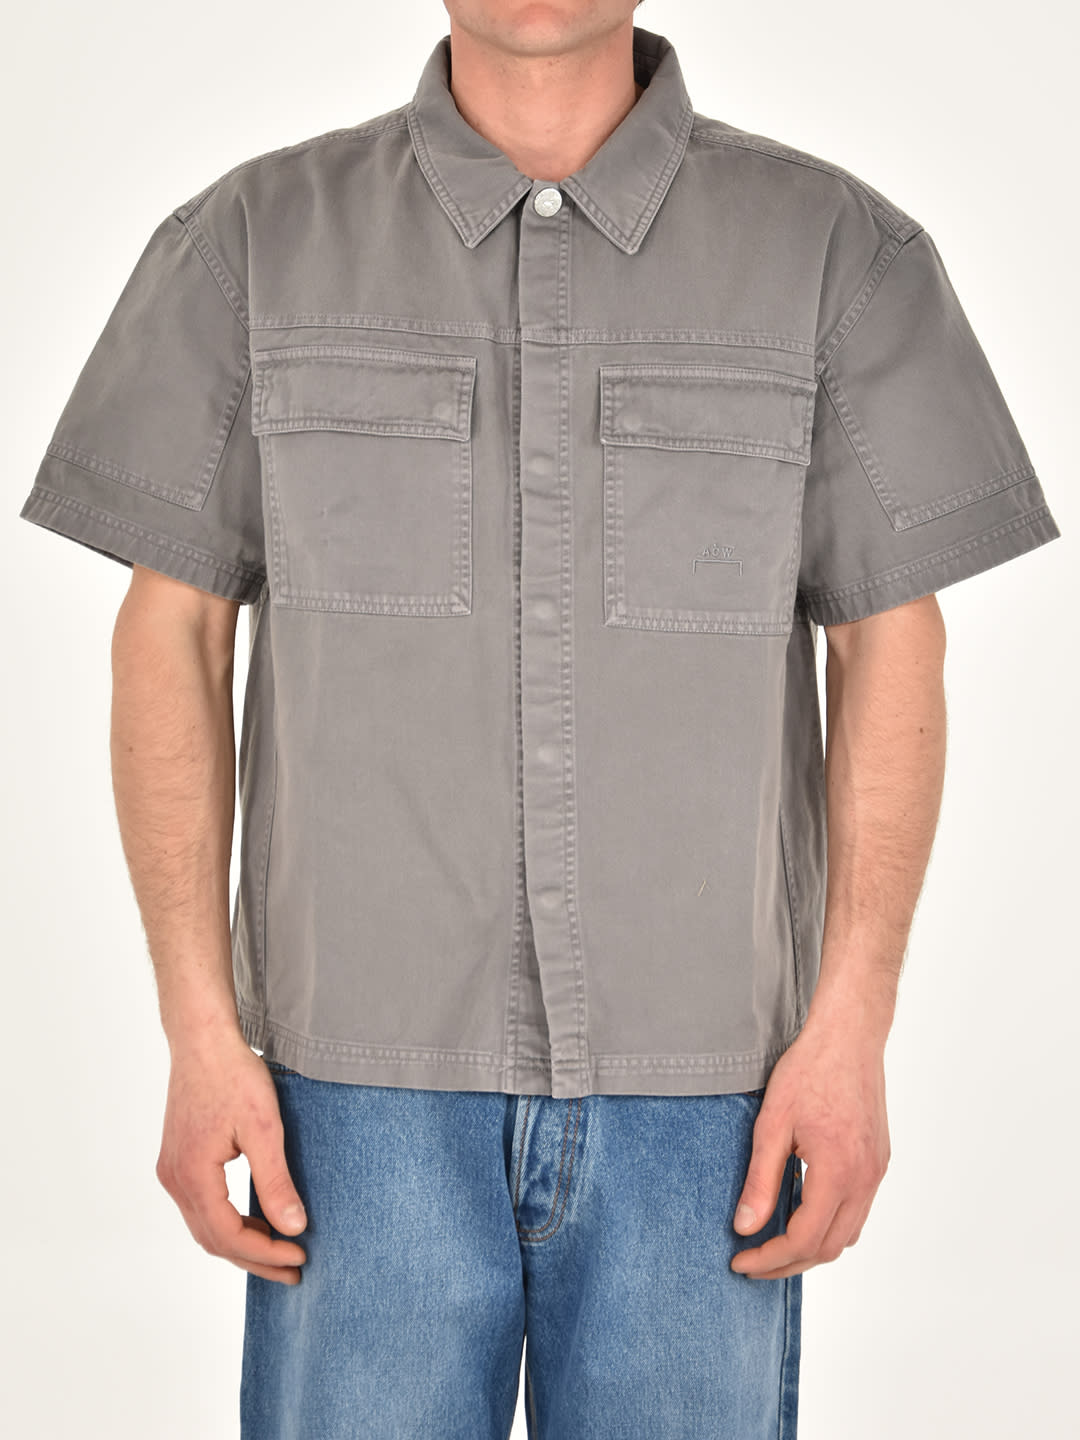 A-COLD-WALL Gray Cotton Shirt